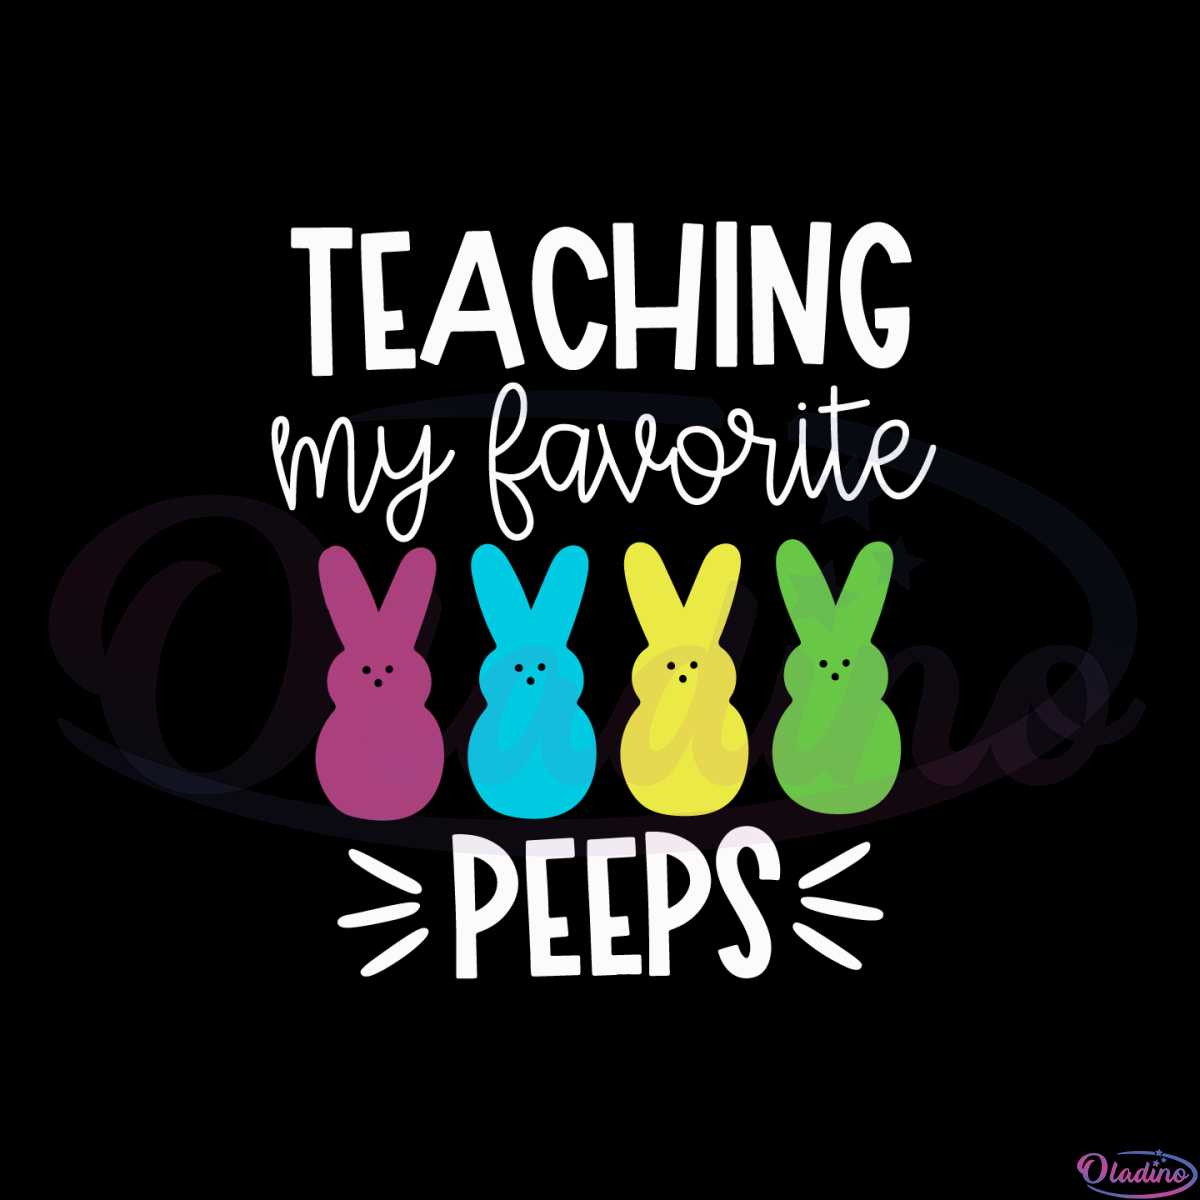 teaching-my-favorite-peeps-teacher-easter-svg-cutting-files